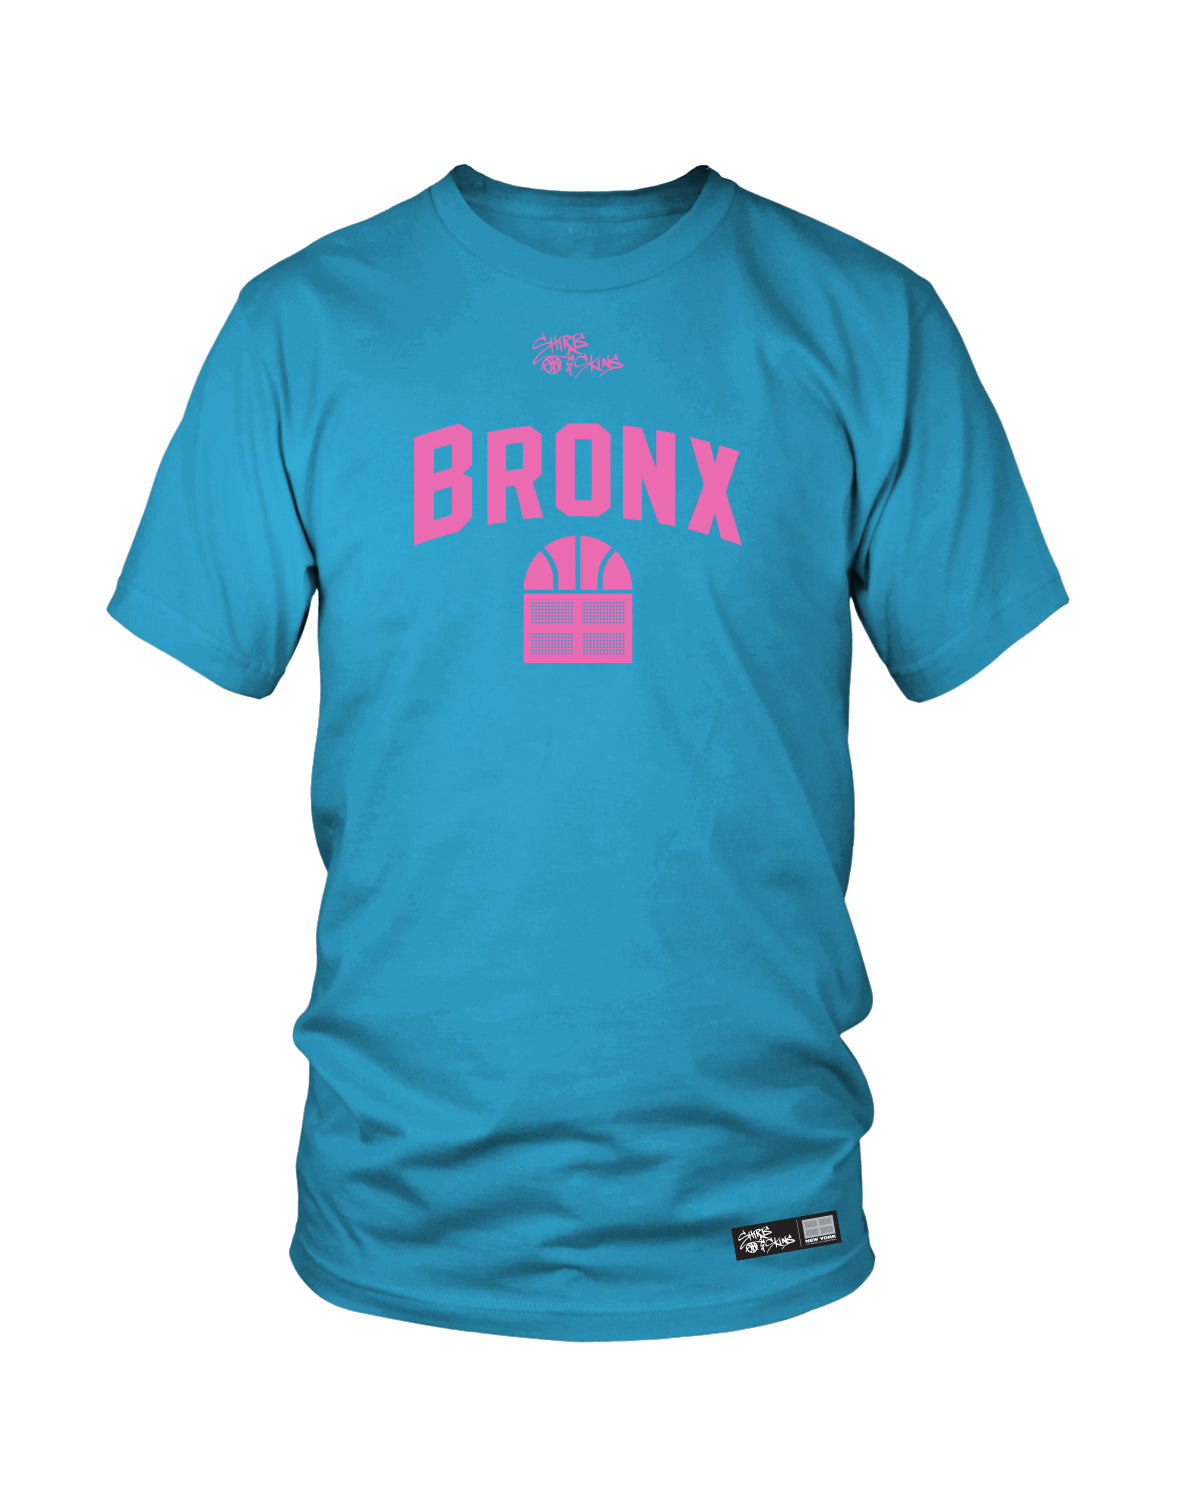 Shirts & Skins Bronx Tee